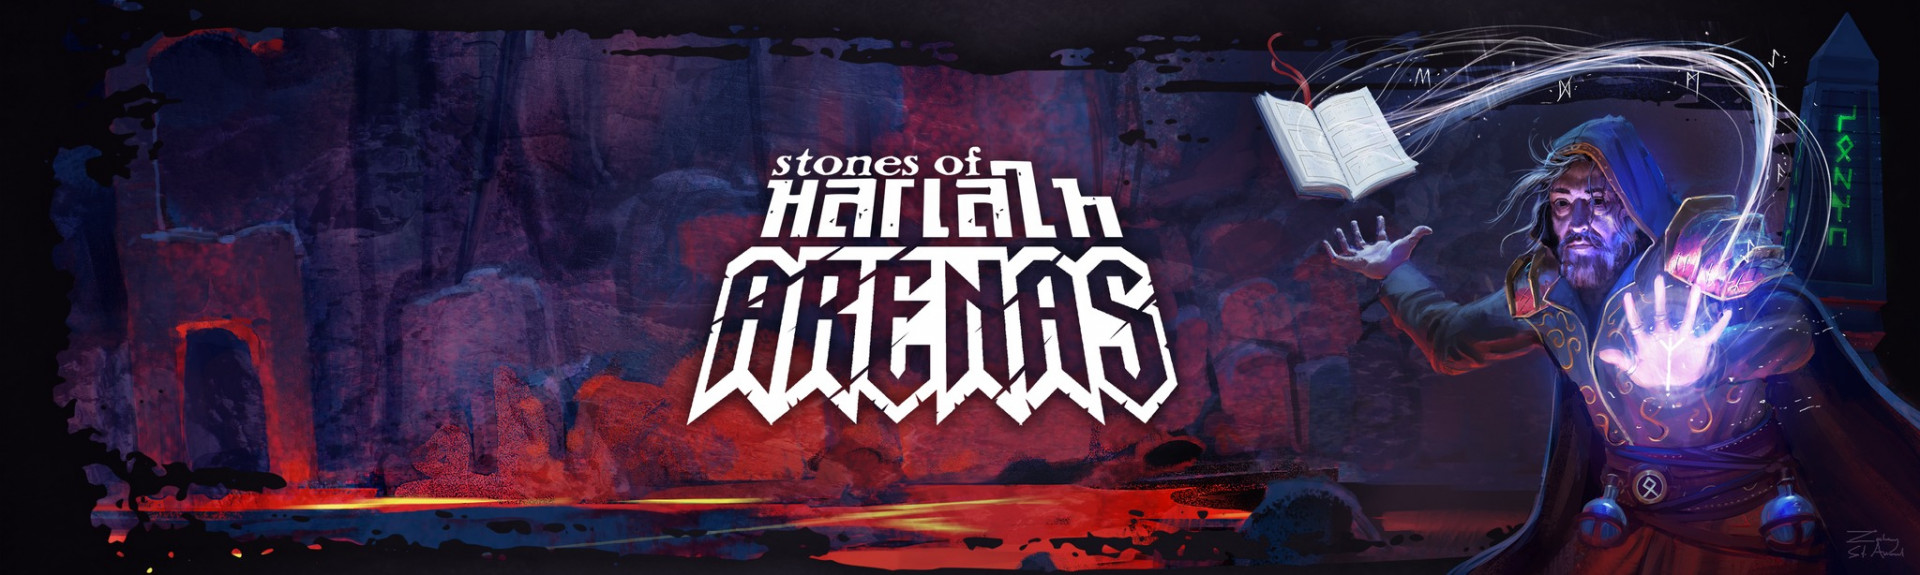 Stones Of Harlath (Rift)